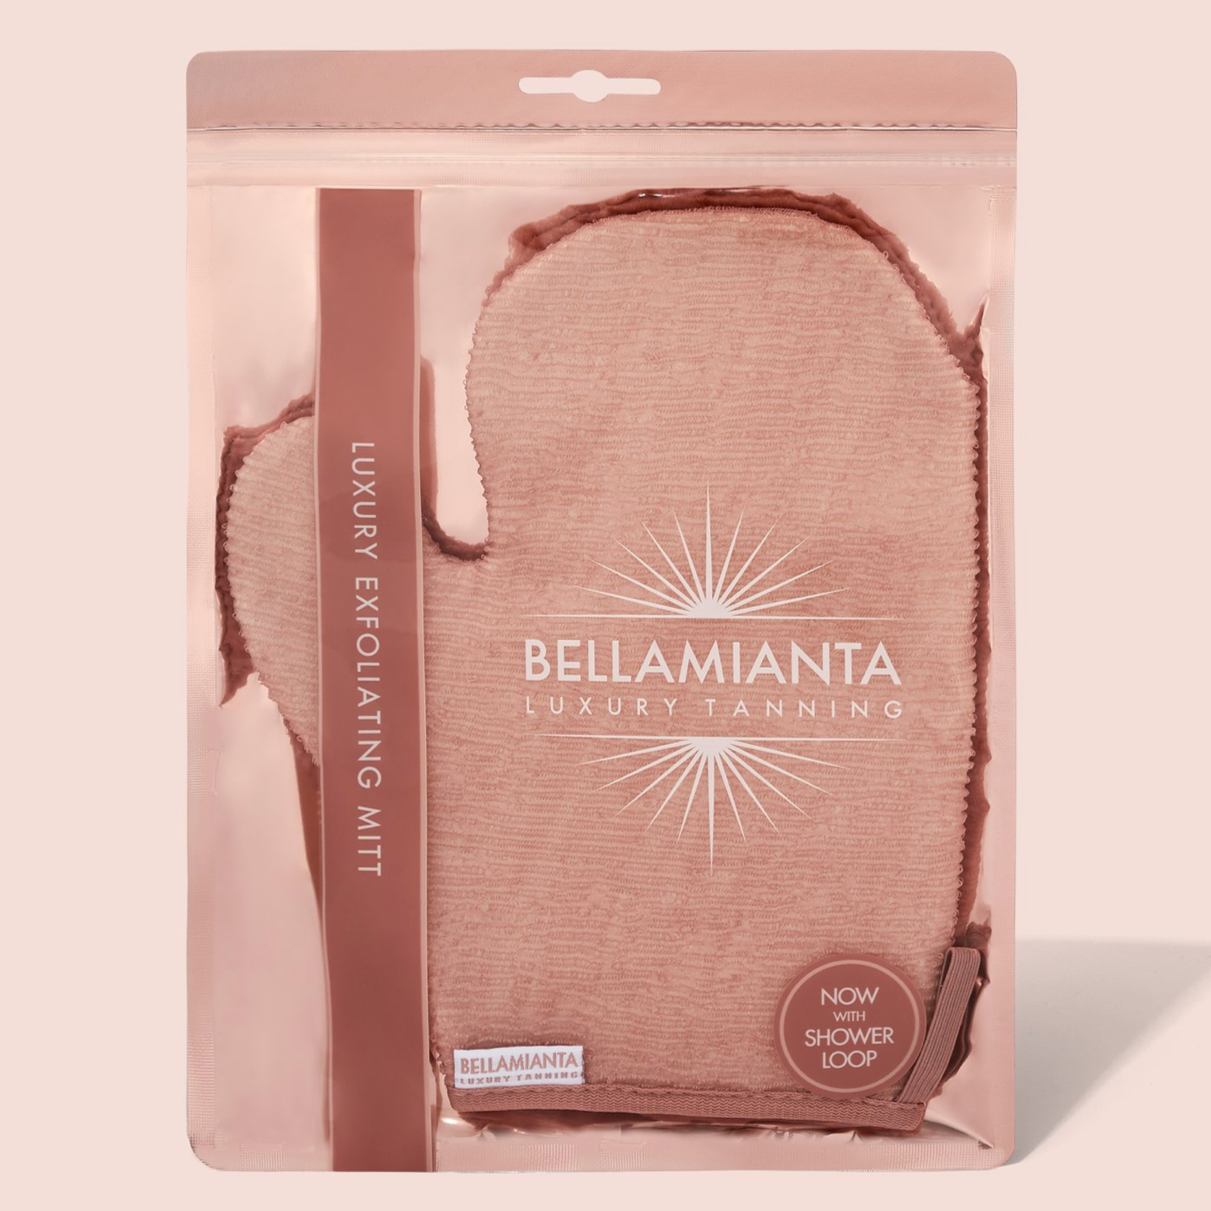 BELLAMIANTA Luxury Exfoliating Mitt, in packaging